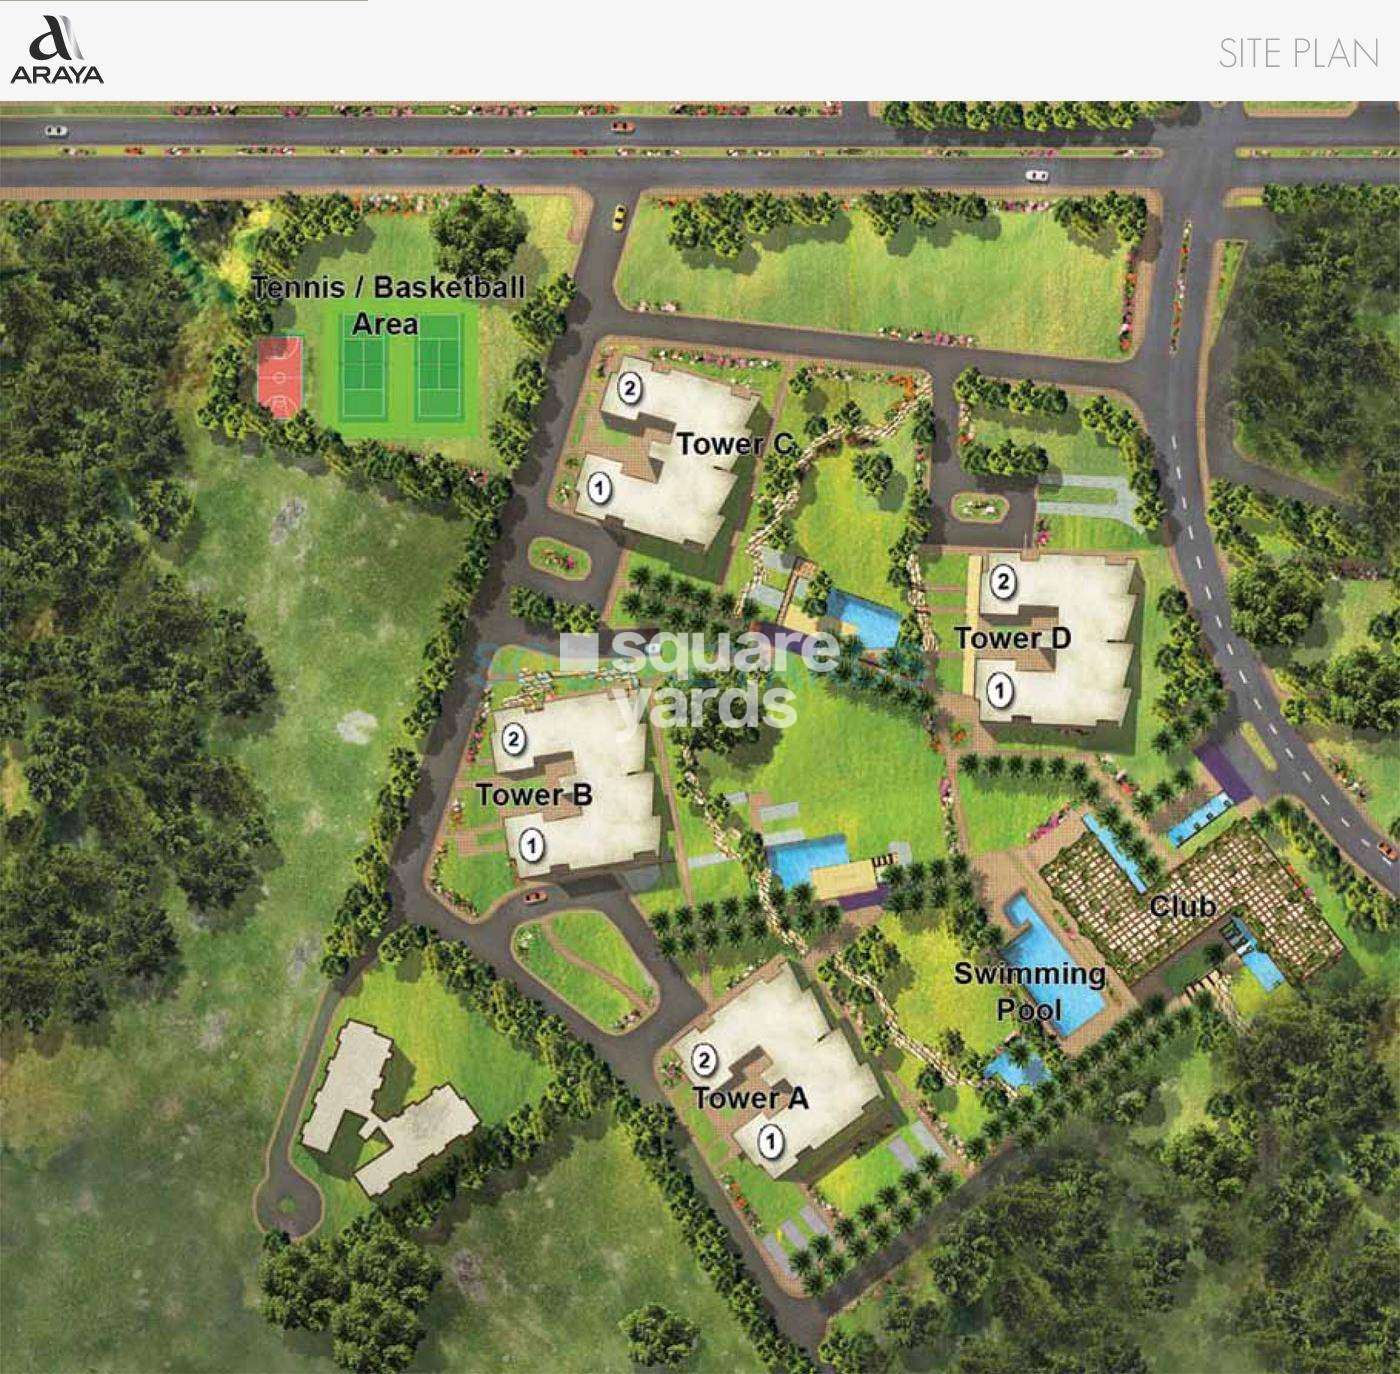 pioneer park araya master plan image1